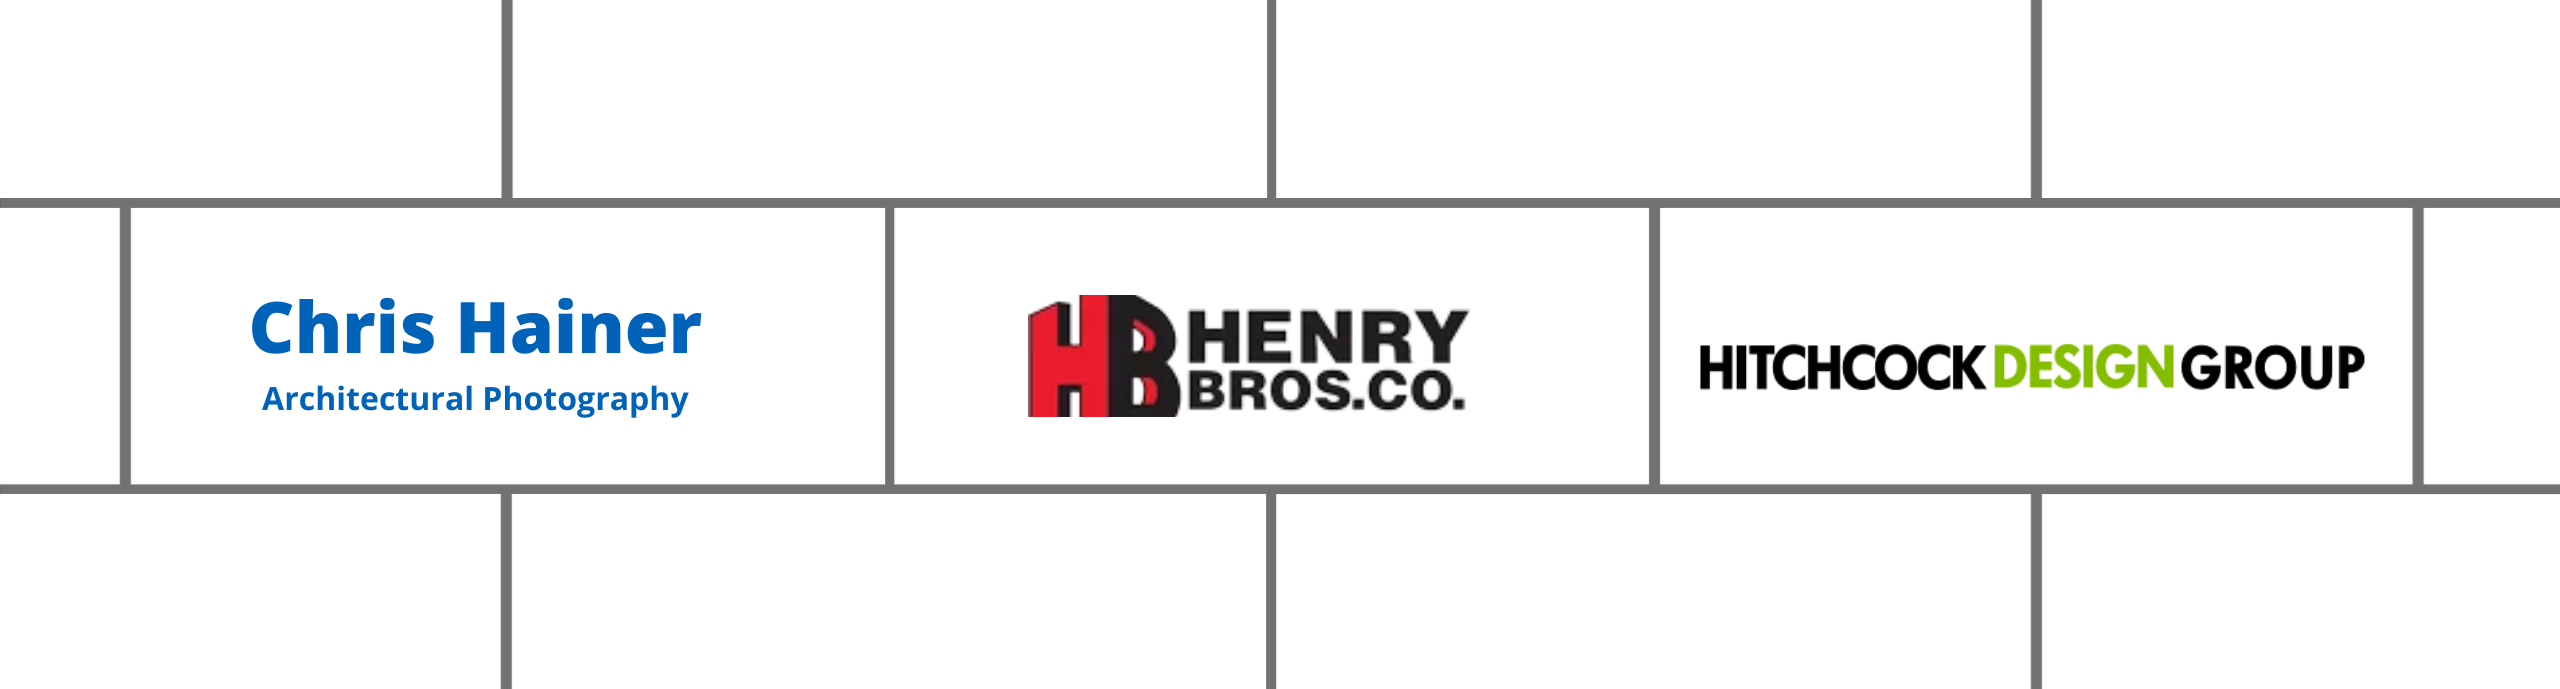 Chris Hainer, Henry Bros., Hitchcock logoslogos